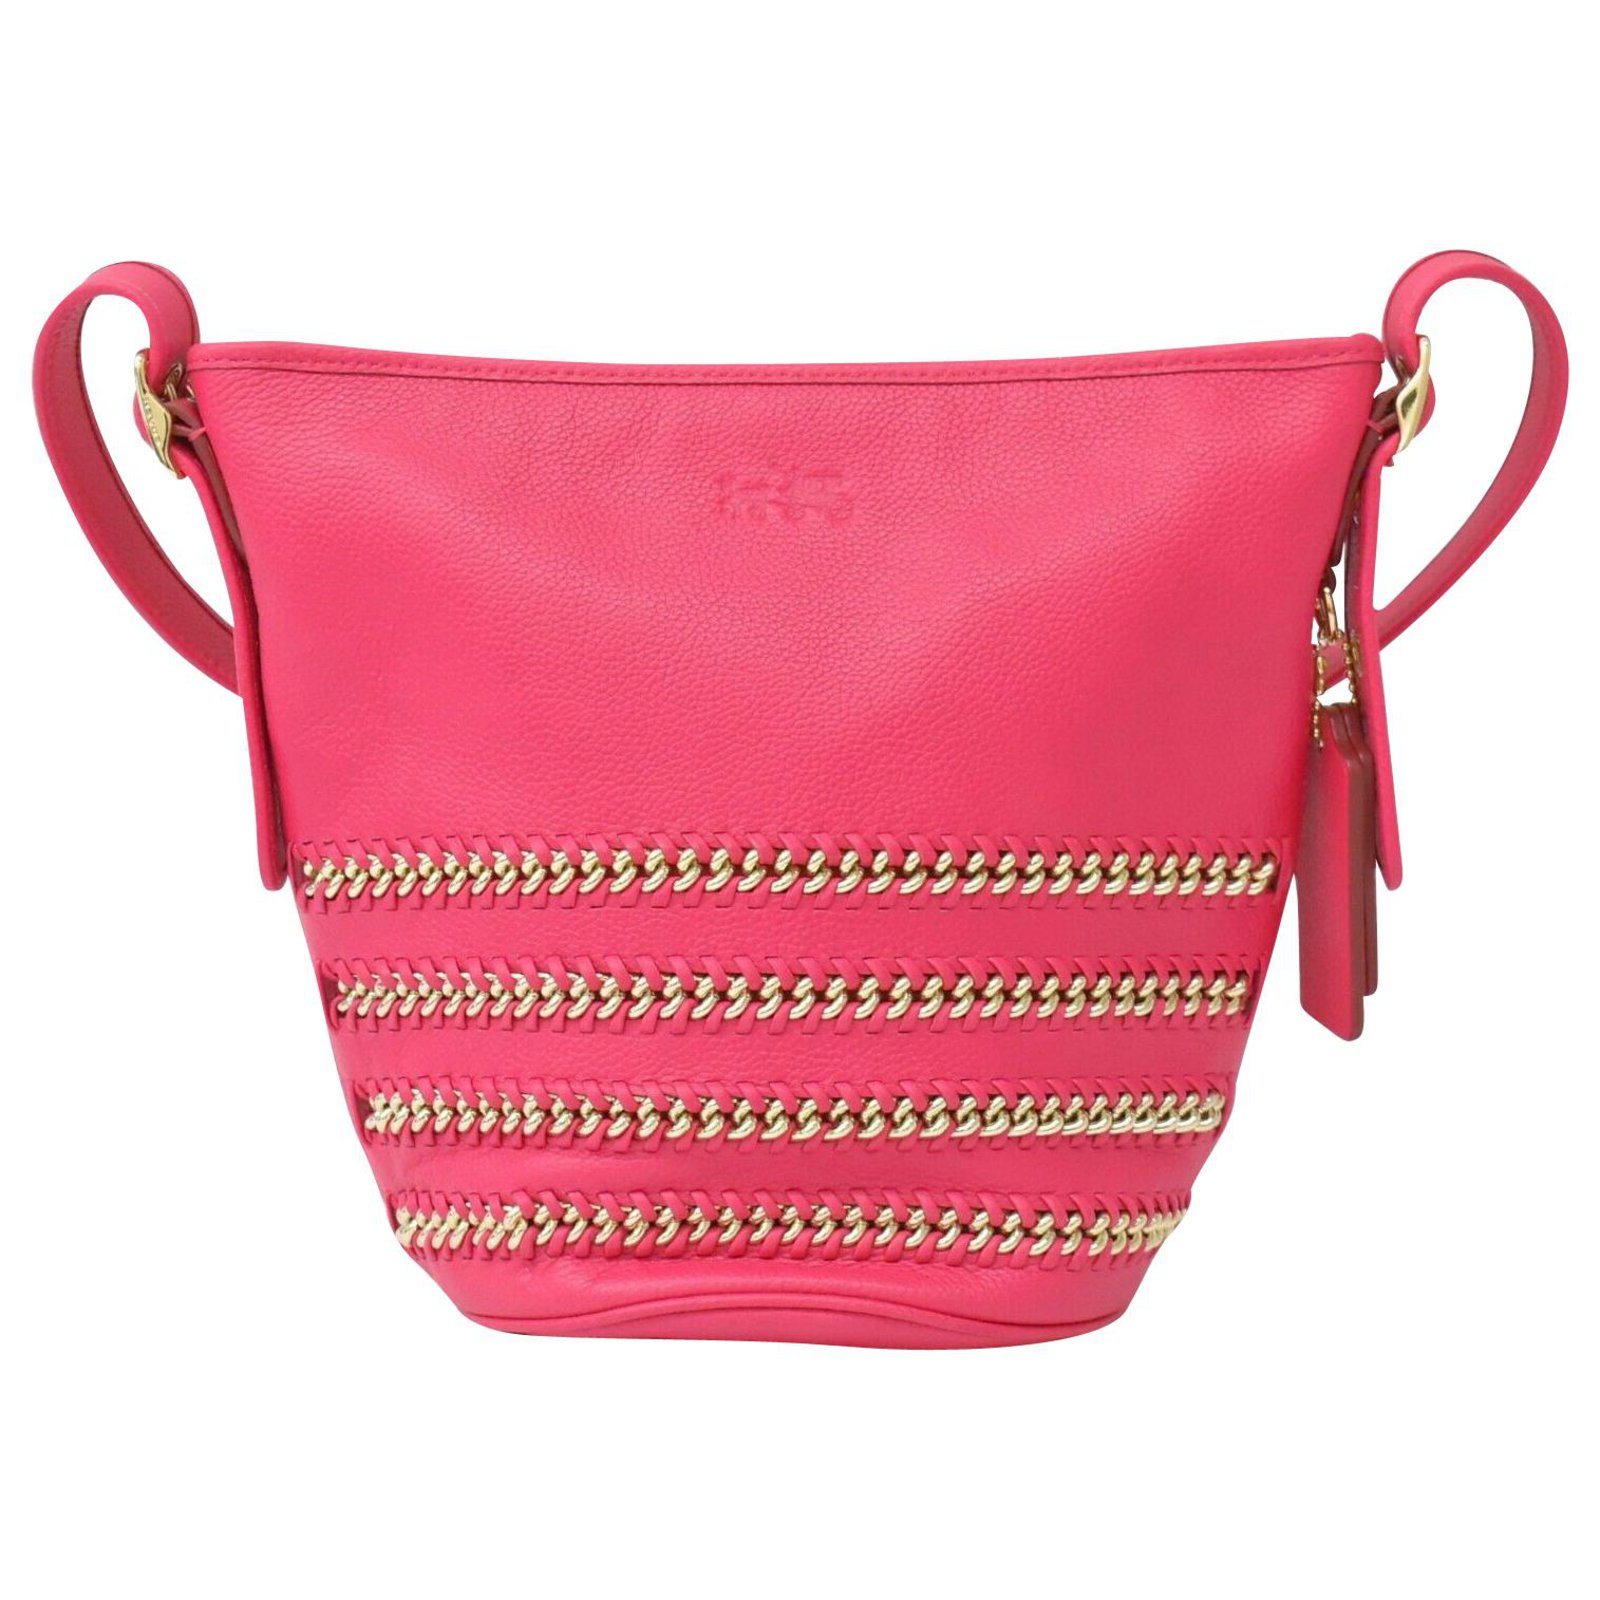 Pink Coach CrossBody Bag